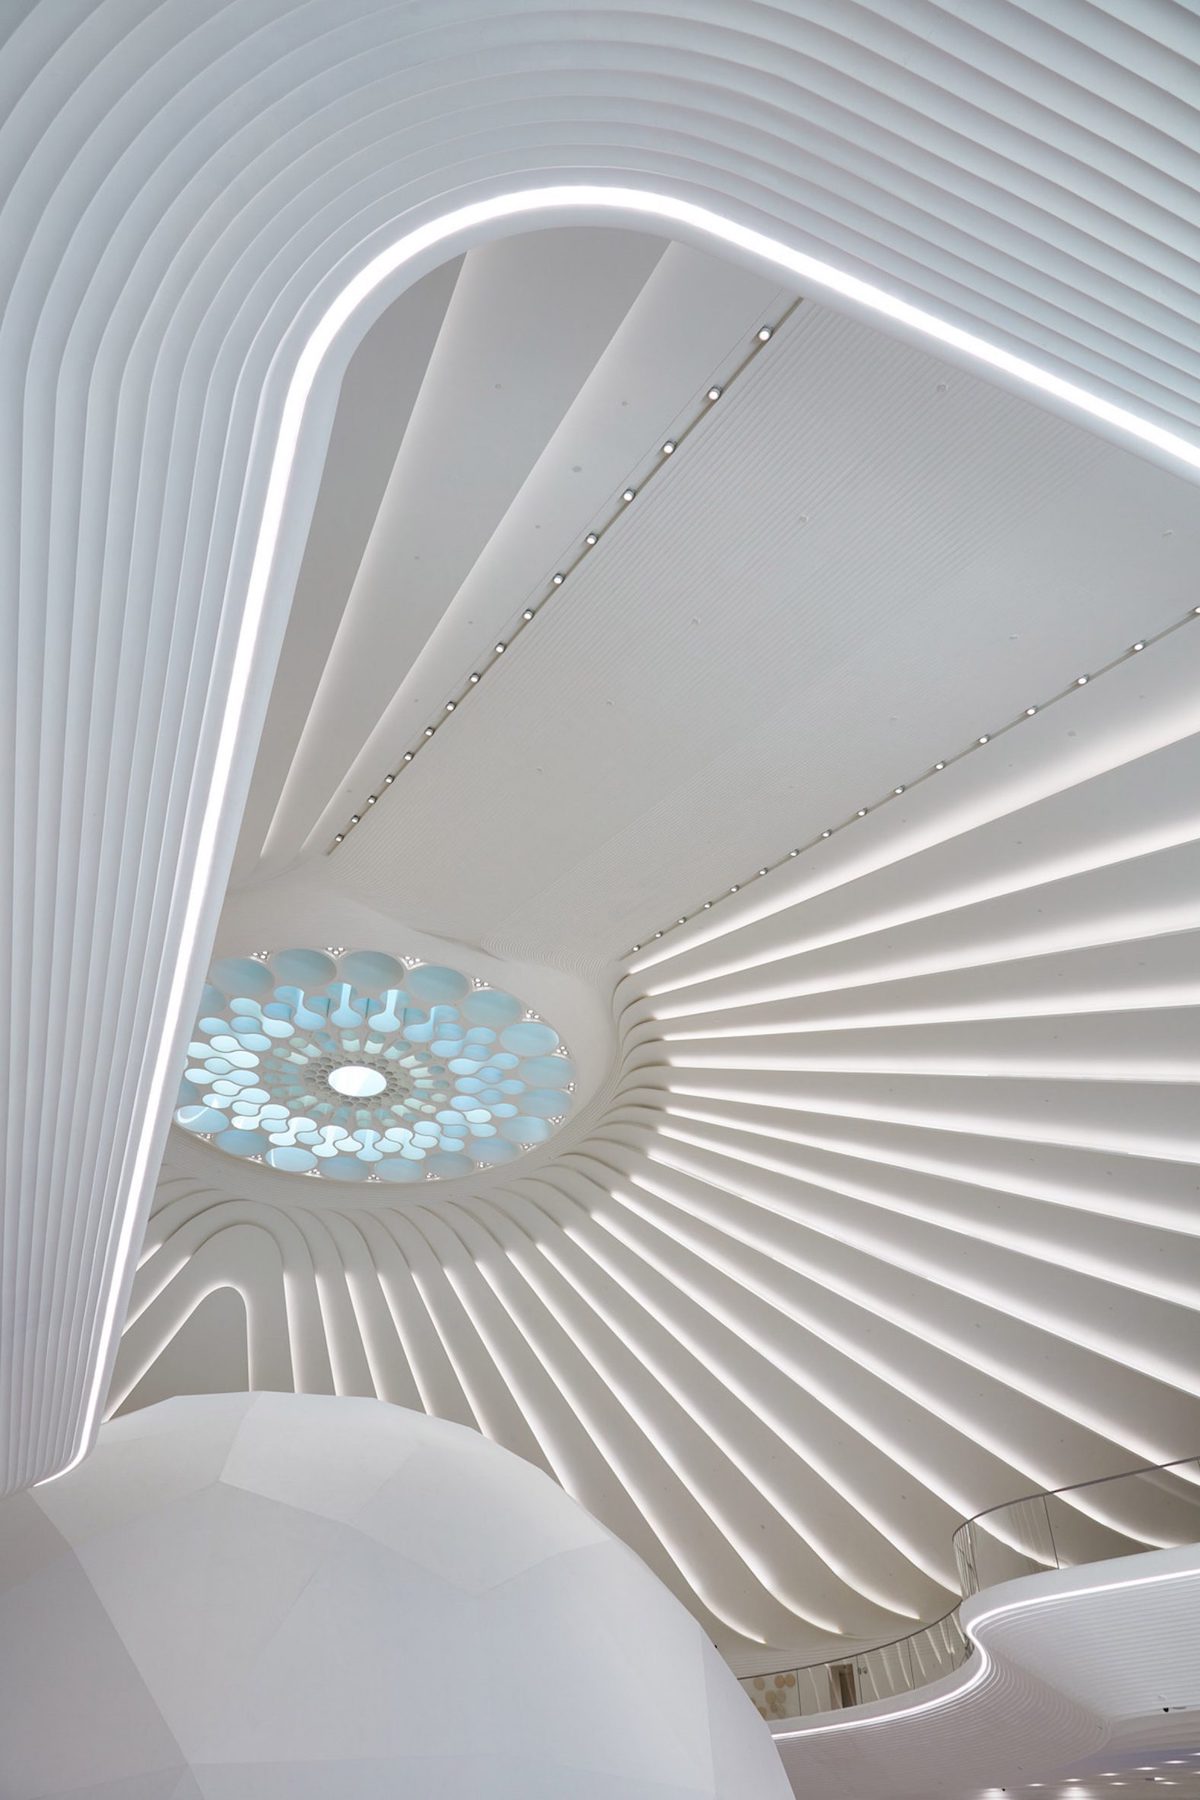 Interior of Santiago Calatrava's UAE Pavilion for Dubai Expo 2020